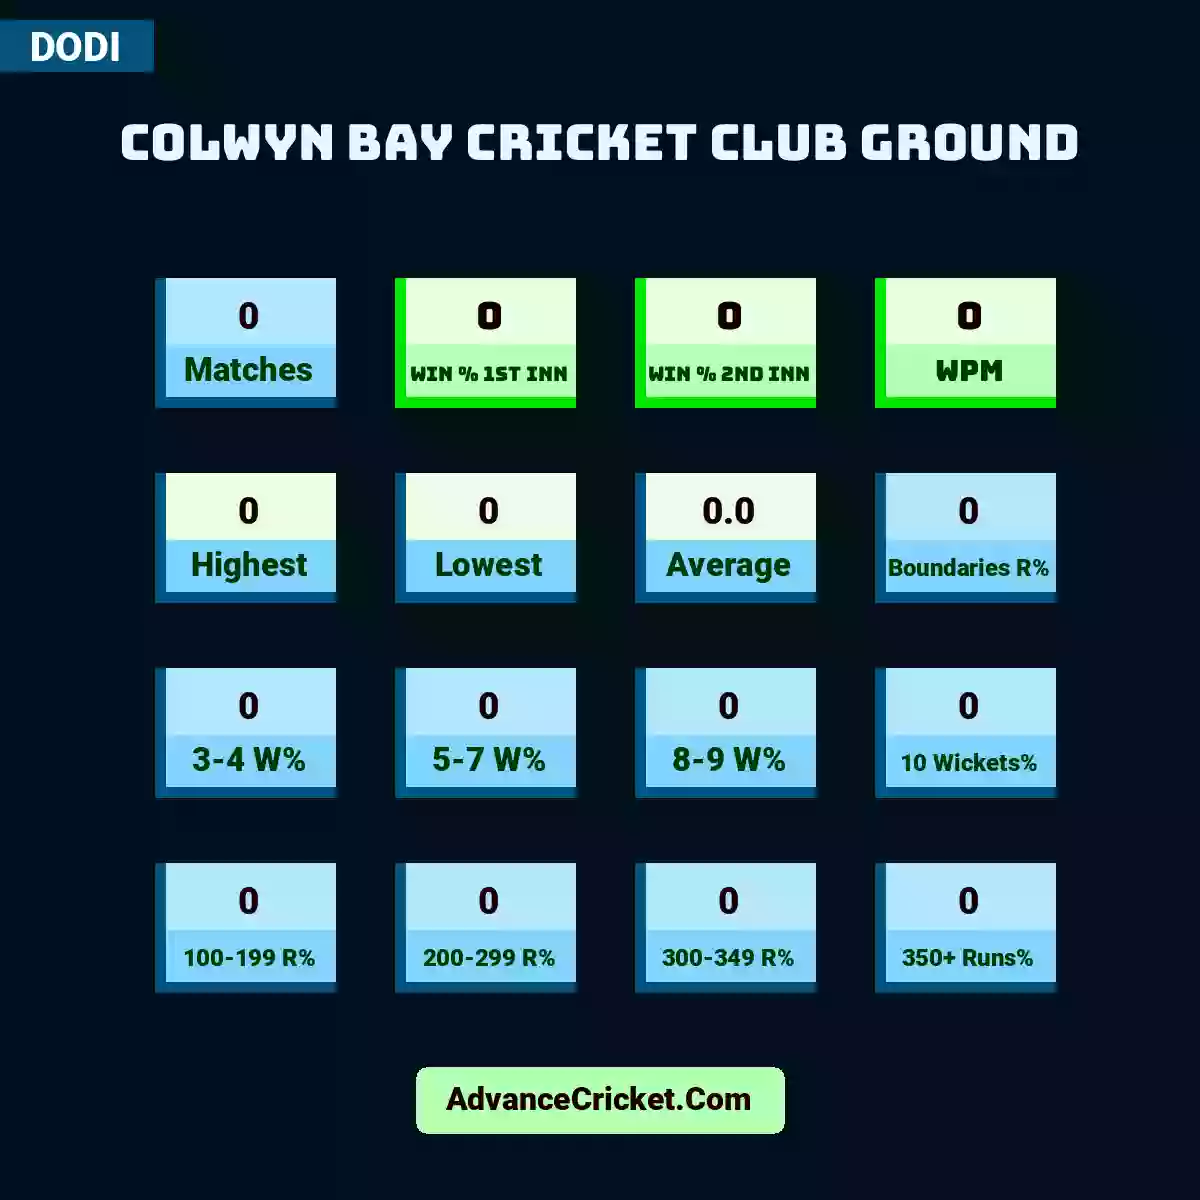 Image showing Colwyn Bay Cricket Club Ground with Matches: 0, Win % 1st Inn: 0, Win % 2nd Inn: 0, WPM: 0, Highest: 0, Lowest: 0, Average: 0.0, Boundaries R%: 0, 3-4 W%: 0, 5-7 W%: 0, 8-9 W%: 0, 10 Wickets%: 0, 100-199 R%: 0, 200-299 R%: 0, 300-349 R%: 0, 350+ Runs%: 0.